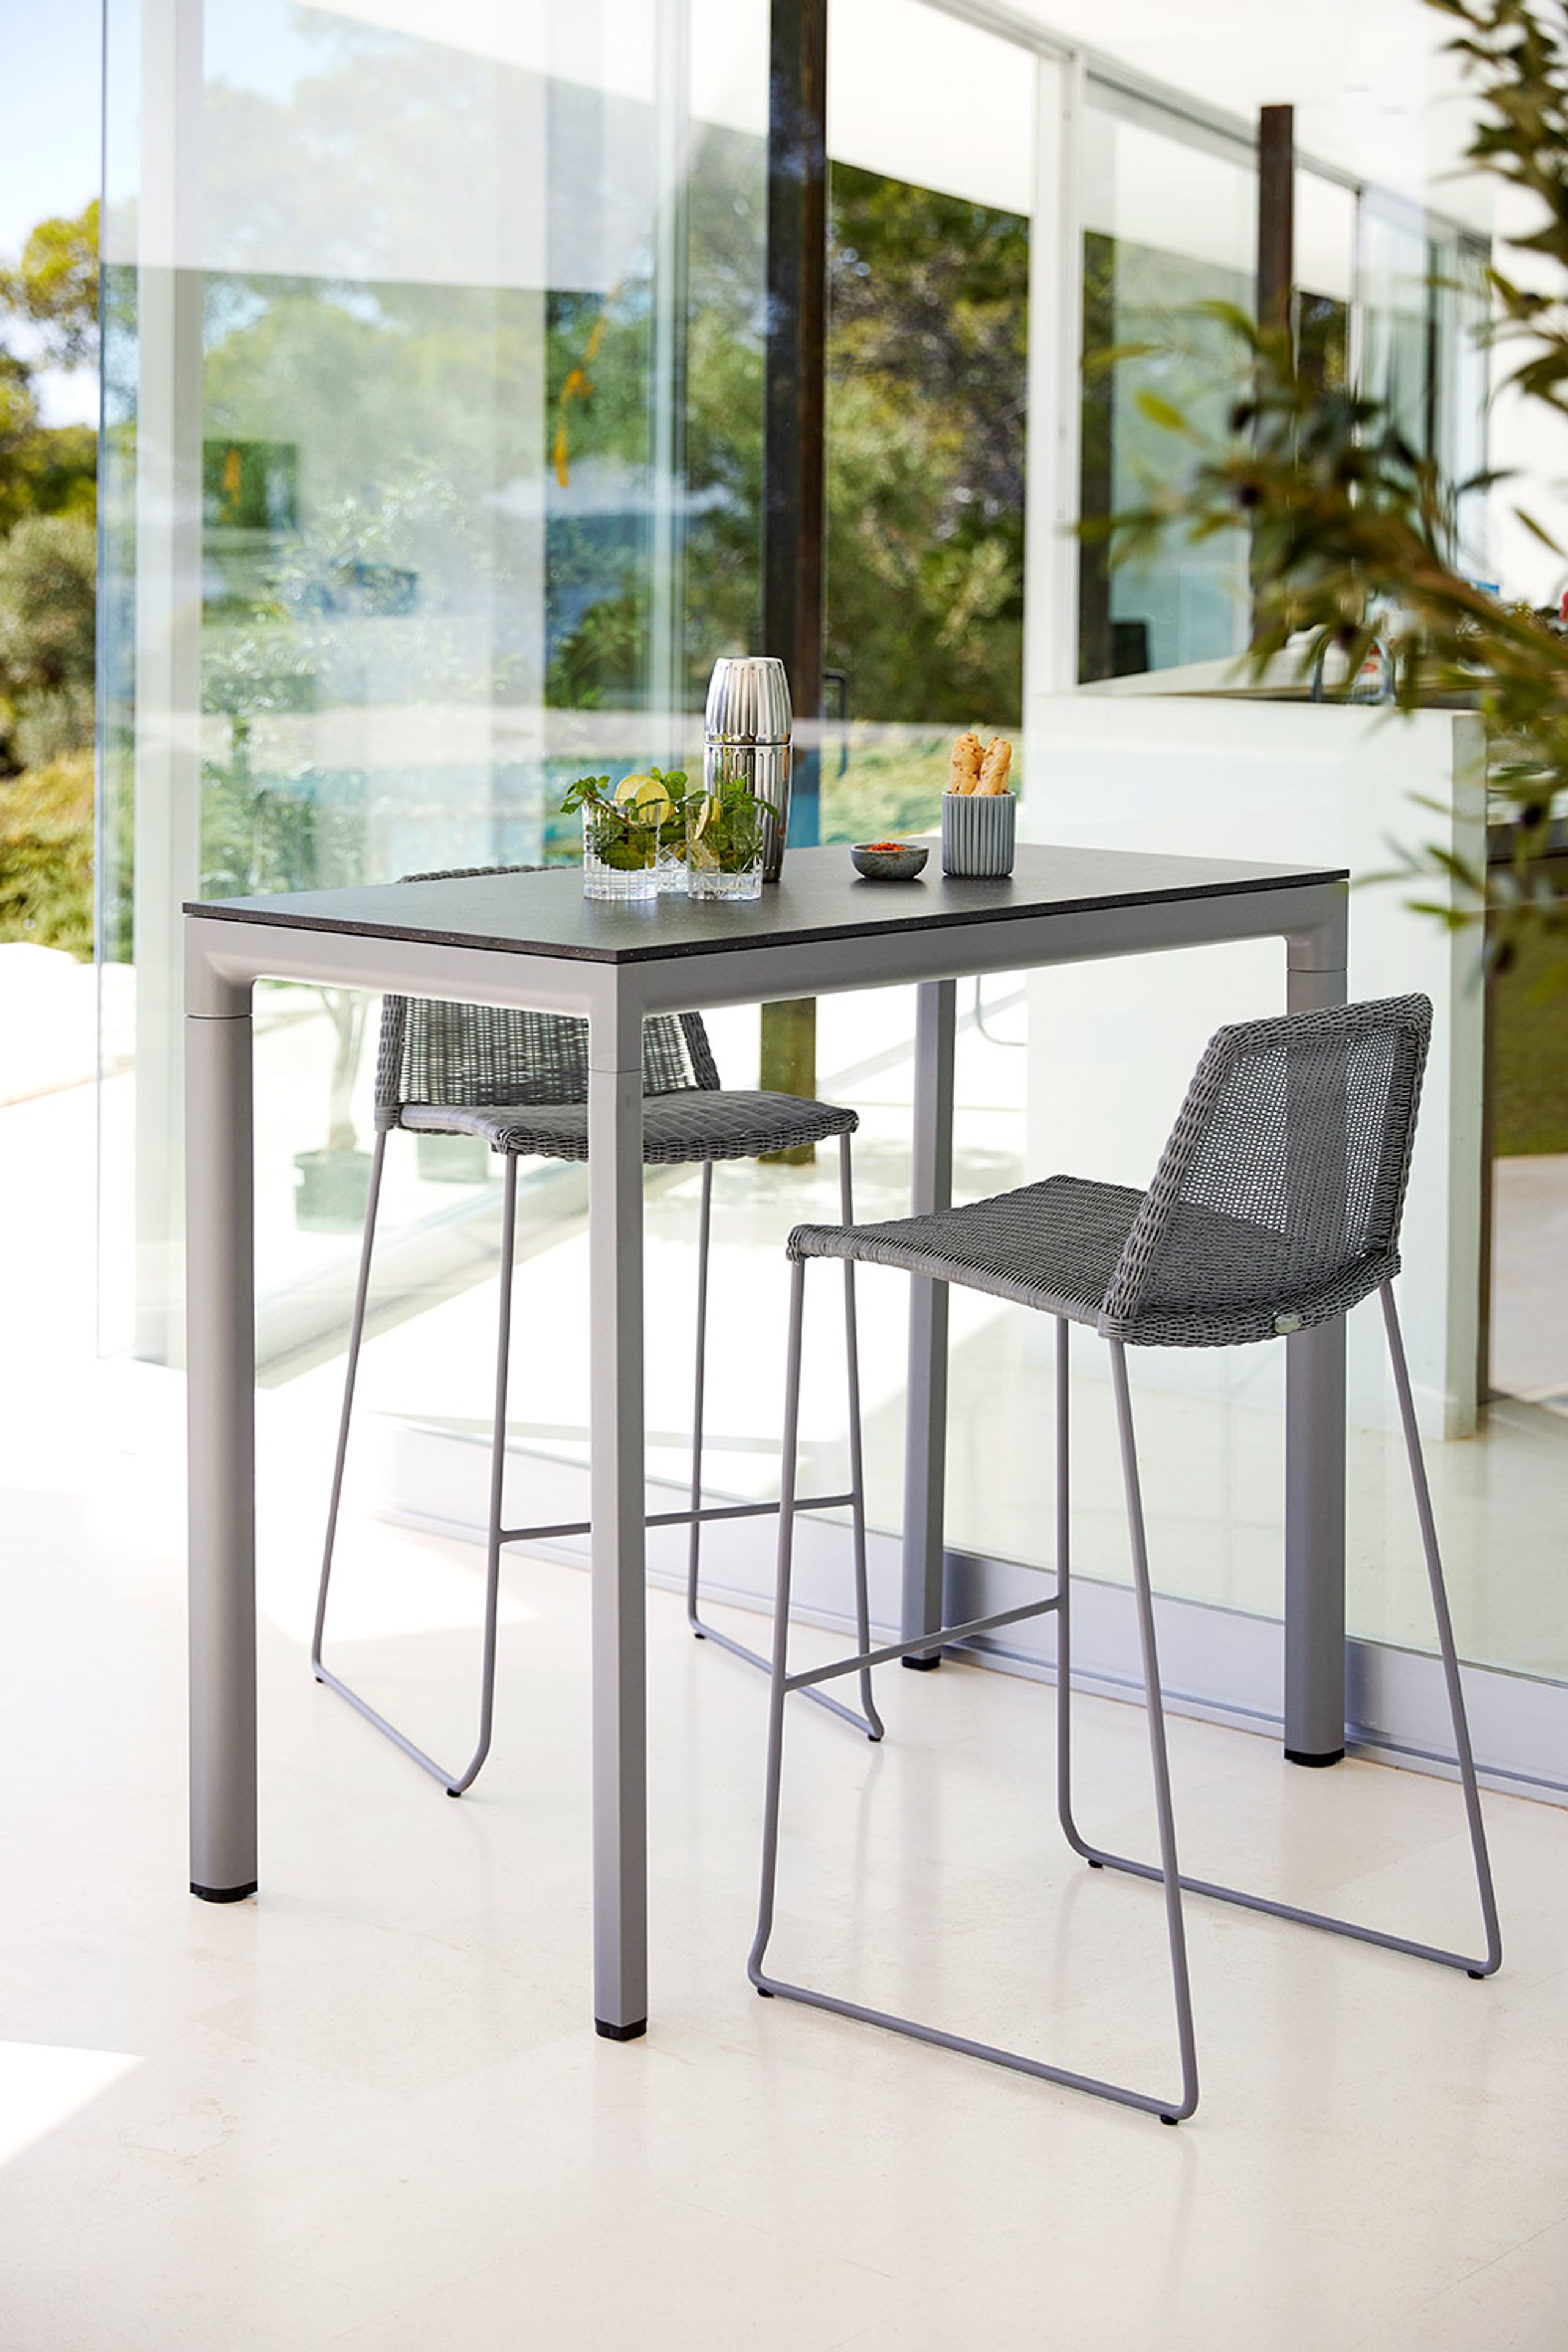 Cane-line - Table de jardin - Drop bar table - 150x75 - Frame: Lava Grey Aluminum / Tabletop: Black Fossil Ceramic